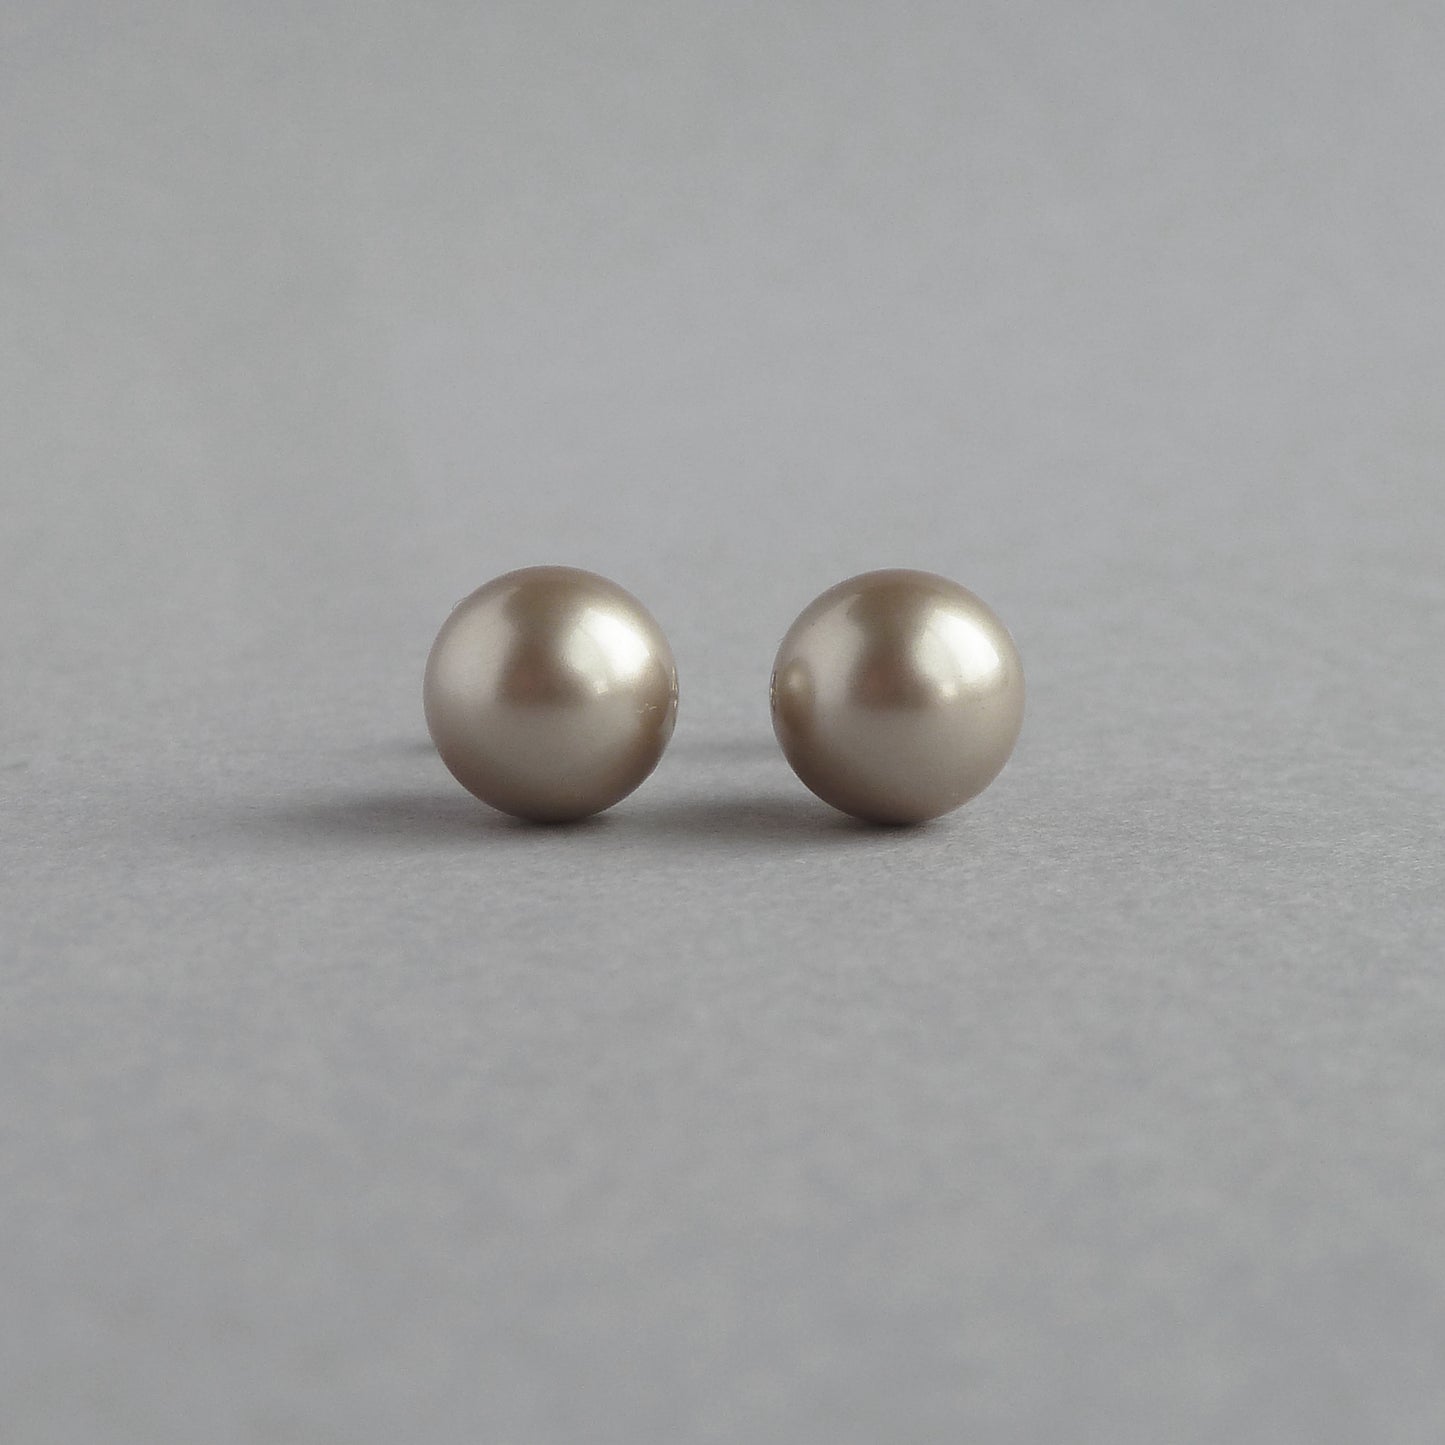 8mm champagne pearl stud earrings